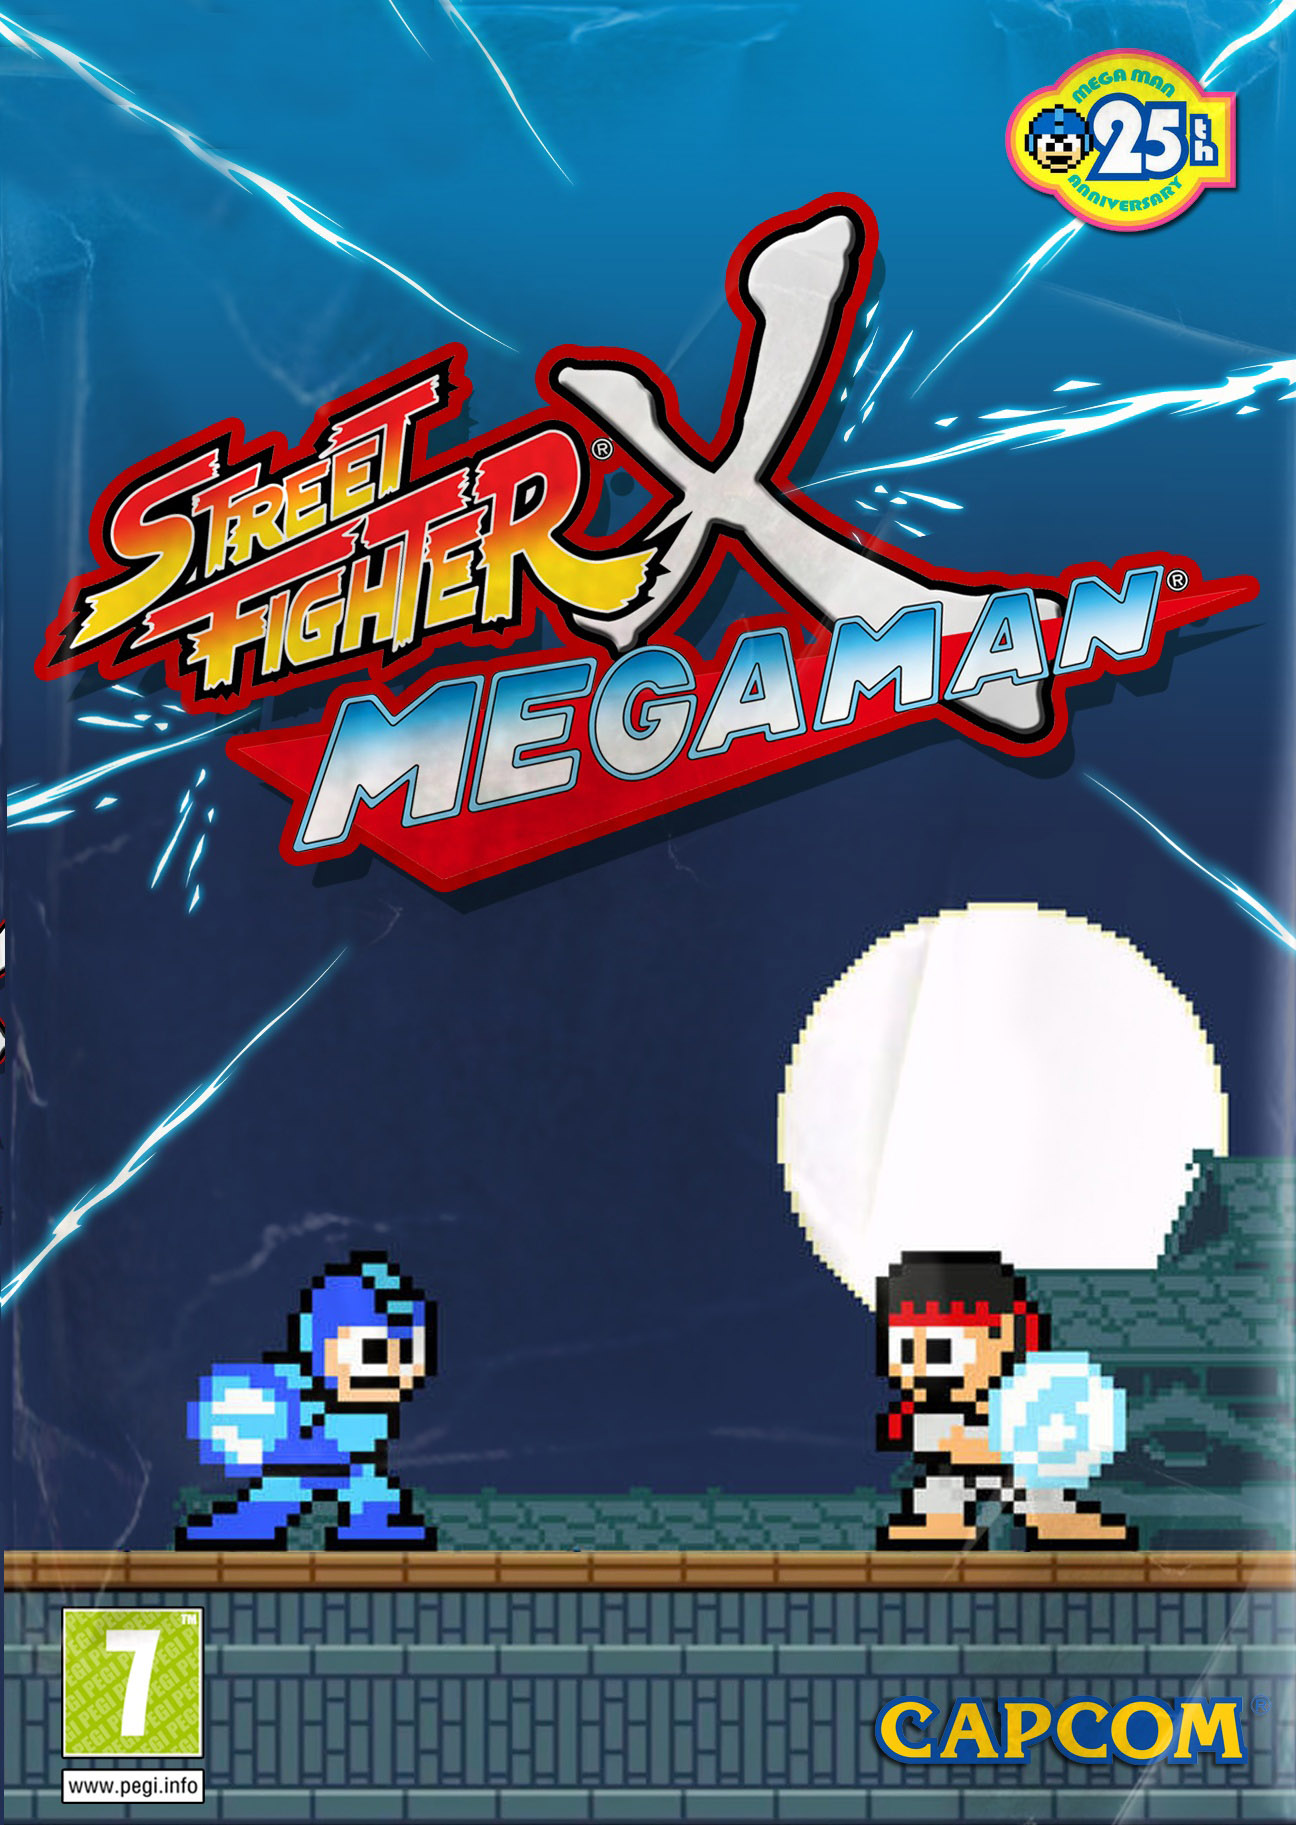 megaman x street fighter download